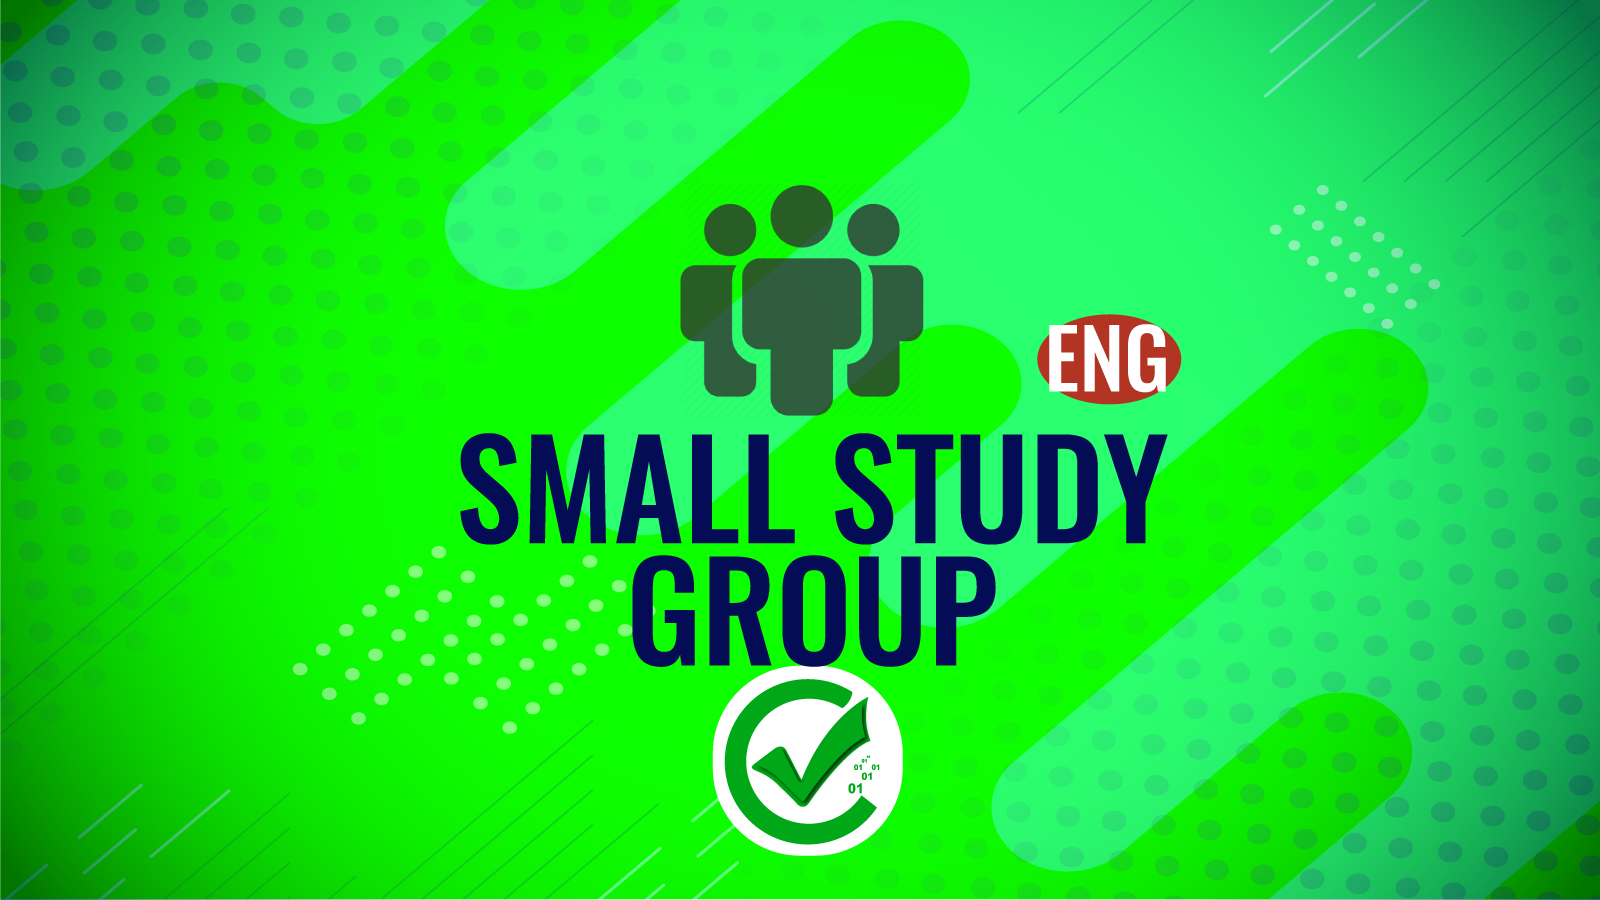 Small Study Group 119 120